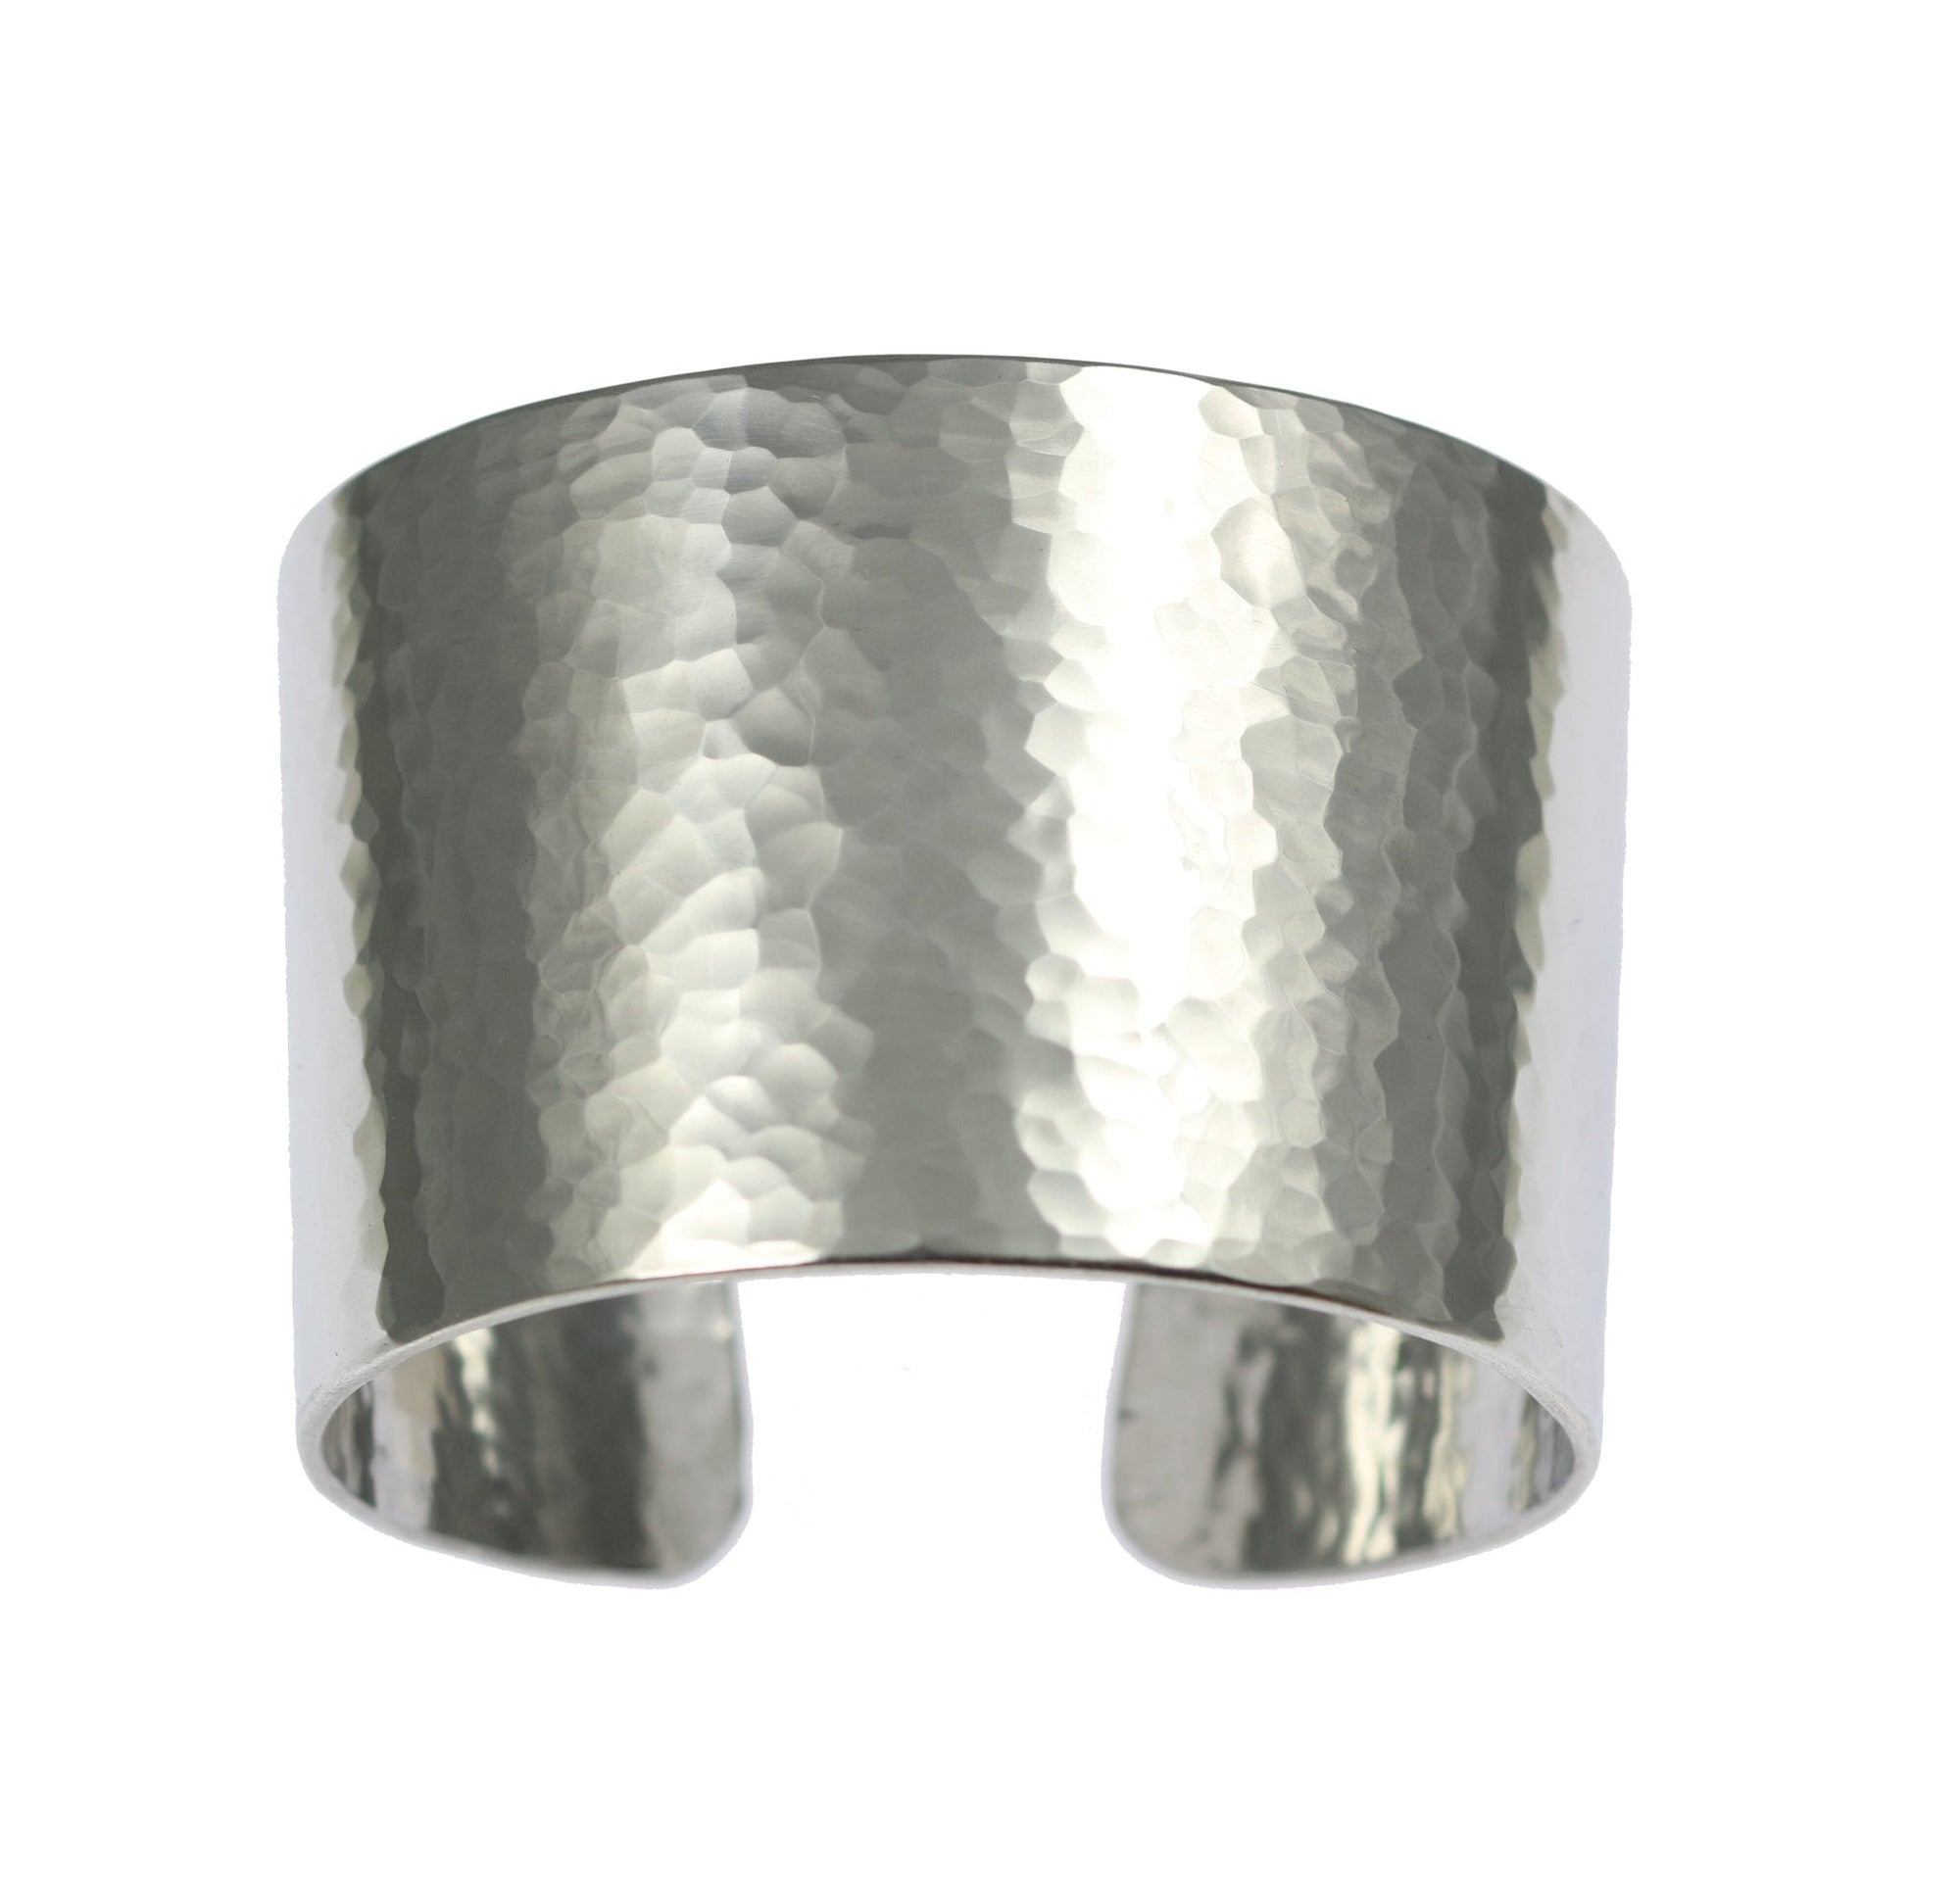 Detail of Hammered Aluminum Cuff Bracelet